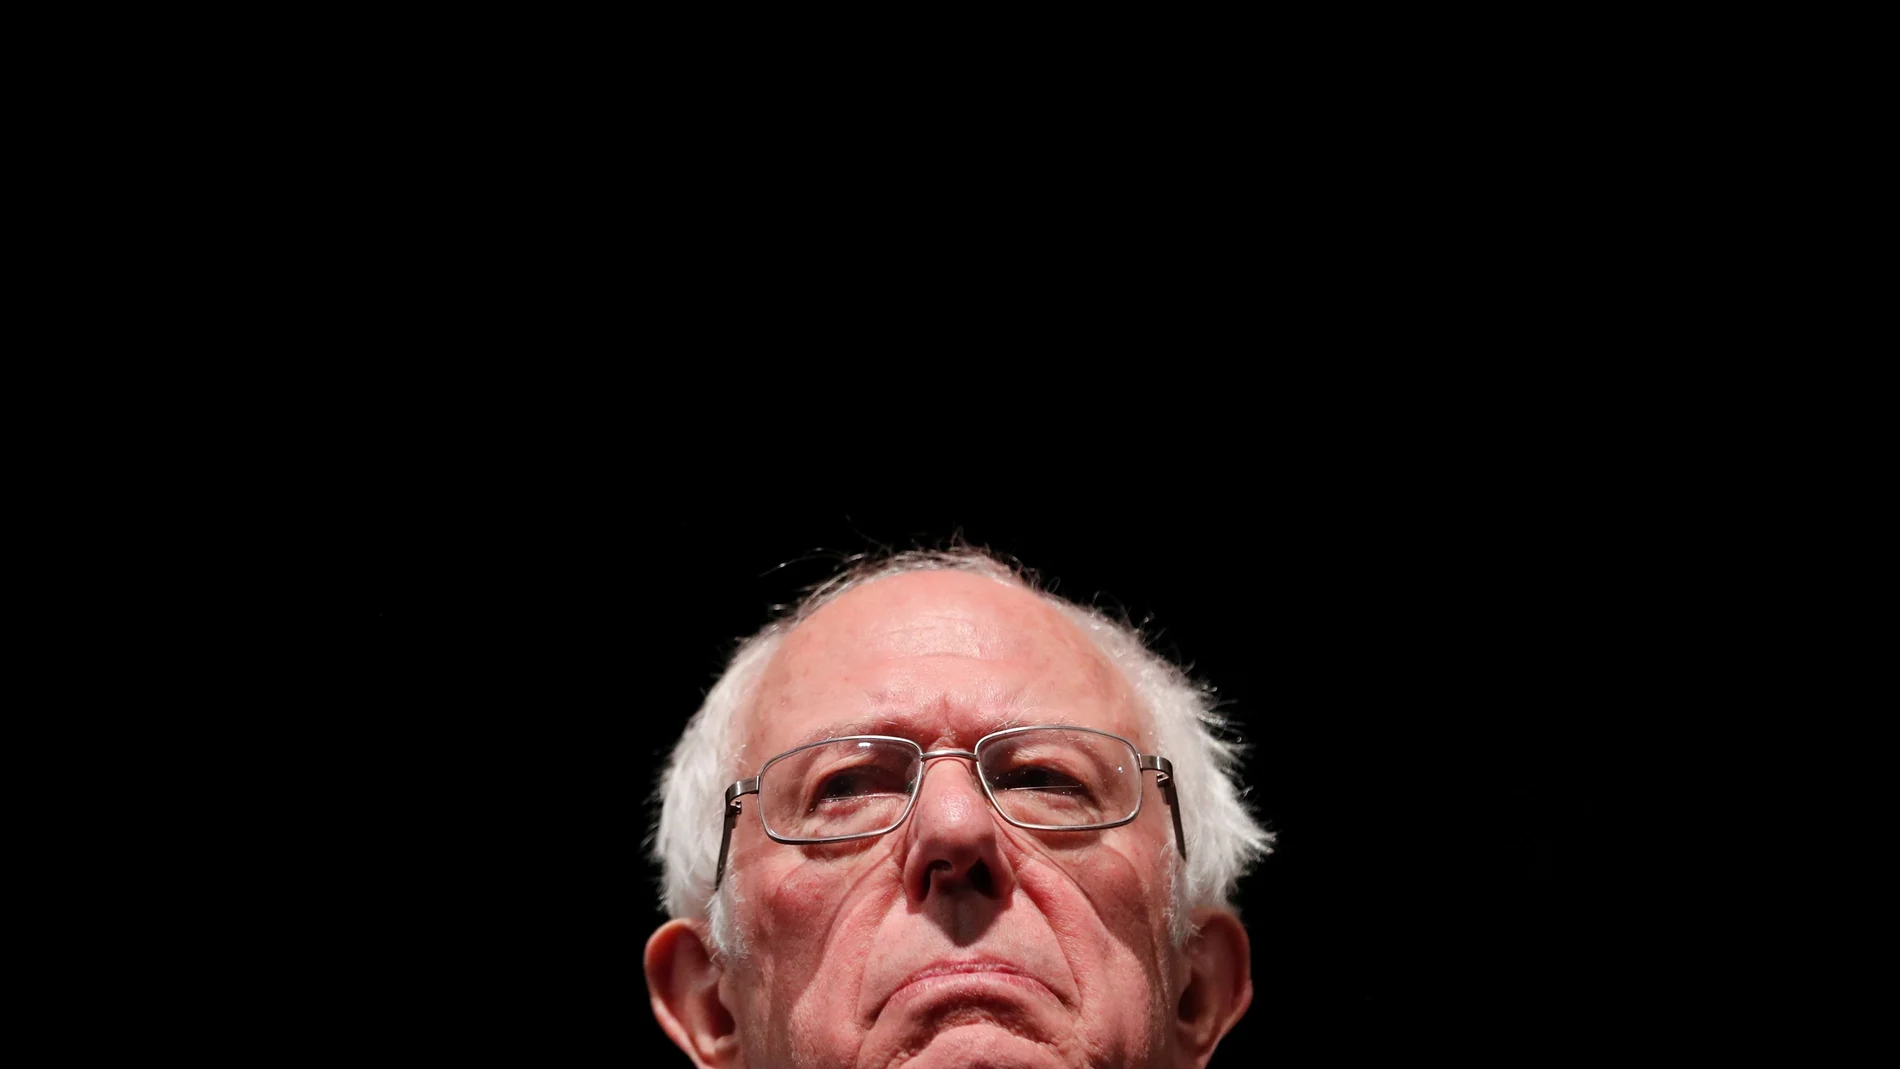 FILE PHOTO: U.S. Democratic presidential candidate Bernie Sanders speaks during a rally in St Louis, Missouri, U.S., March 9, 2020. REUTERS/Lucas Jackson/File Photo